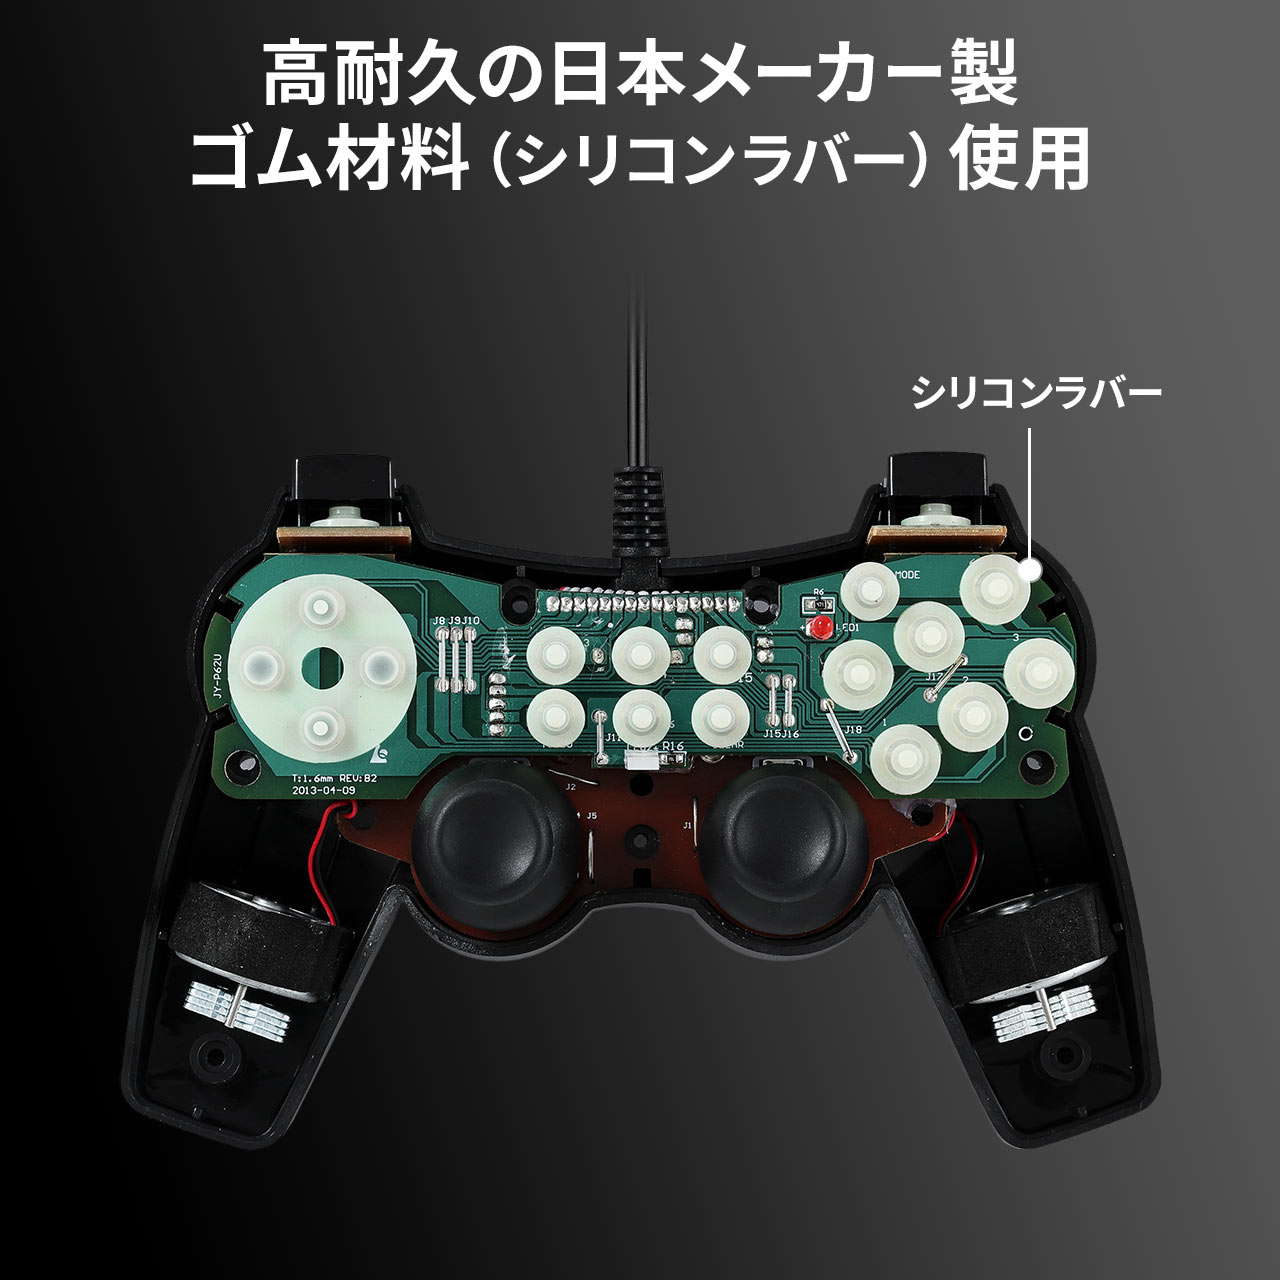 USBゲームパッド 16ボタン 全ボタン連射対応 アナログ デジタル Xinput対応 振動機能つき 日本製高耐久シリコンラバー使用 Windows専用 400-JYP62UBKX